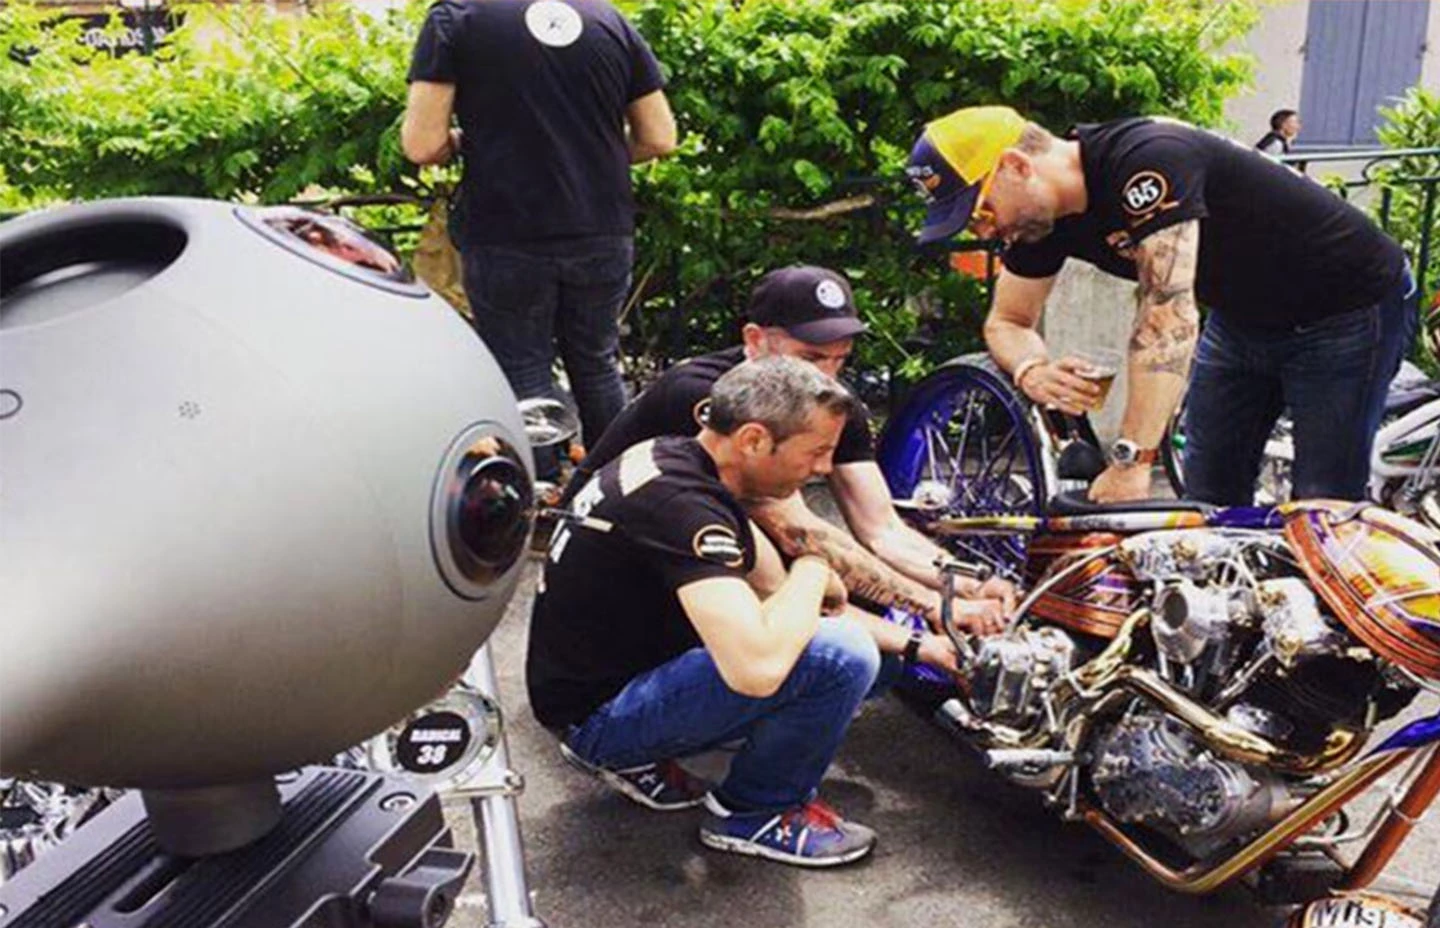 360 camera capturing footage of four men working on a Harley Davidson motorbike